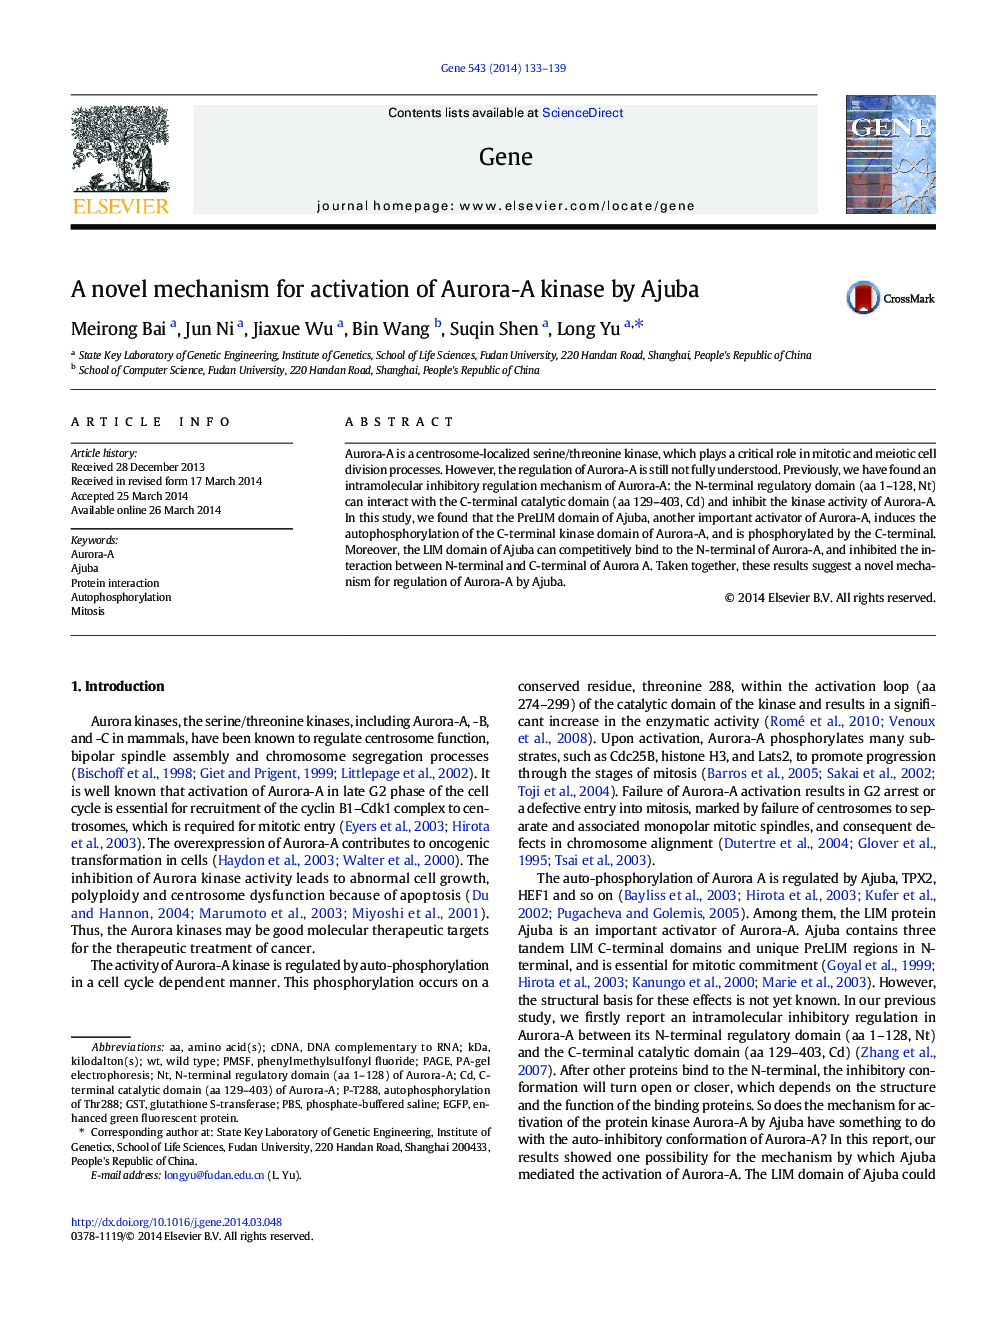 A novel mechanism for activation of Aurora-A kinase by Ajuba